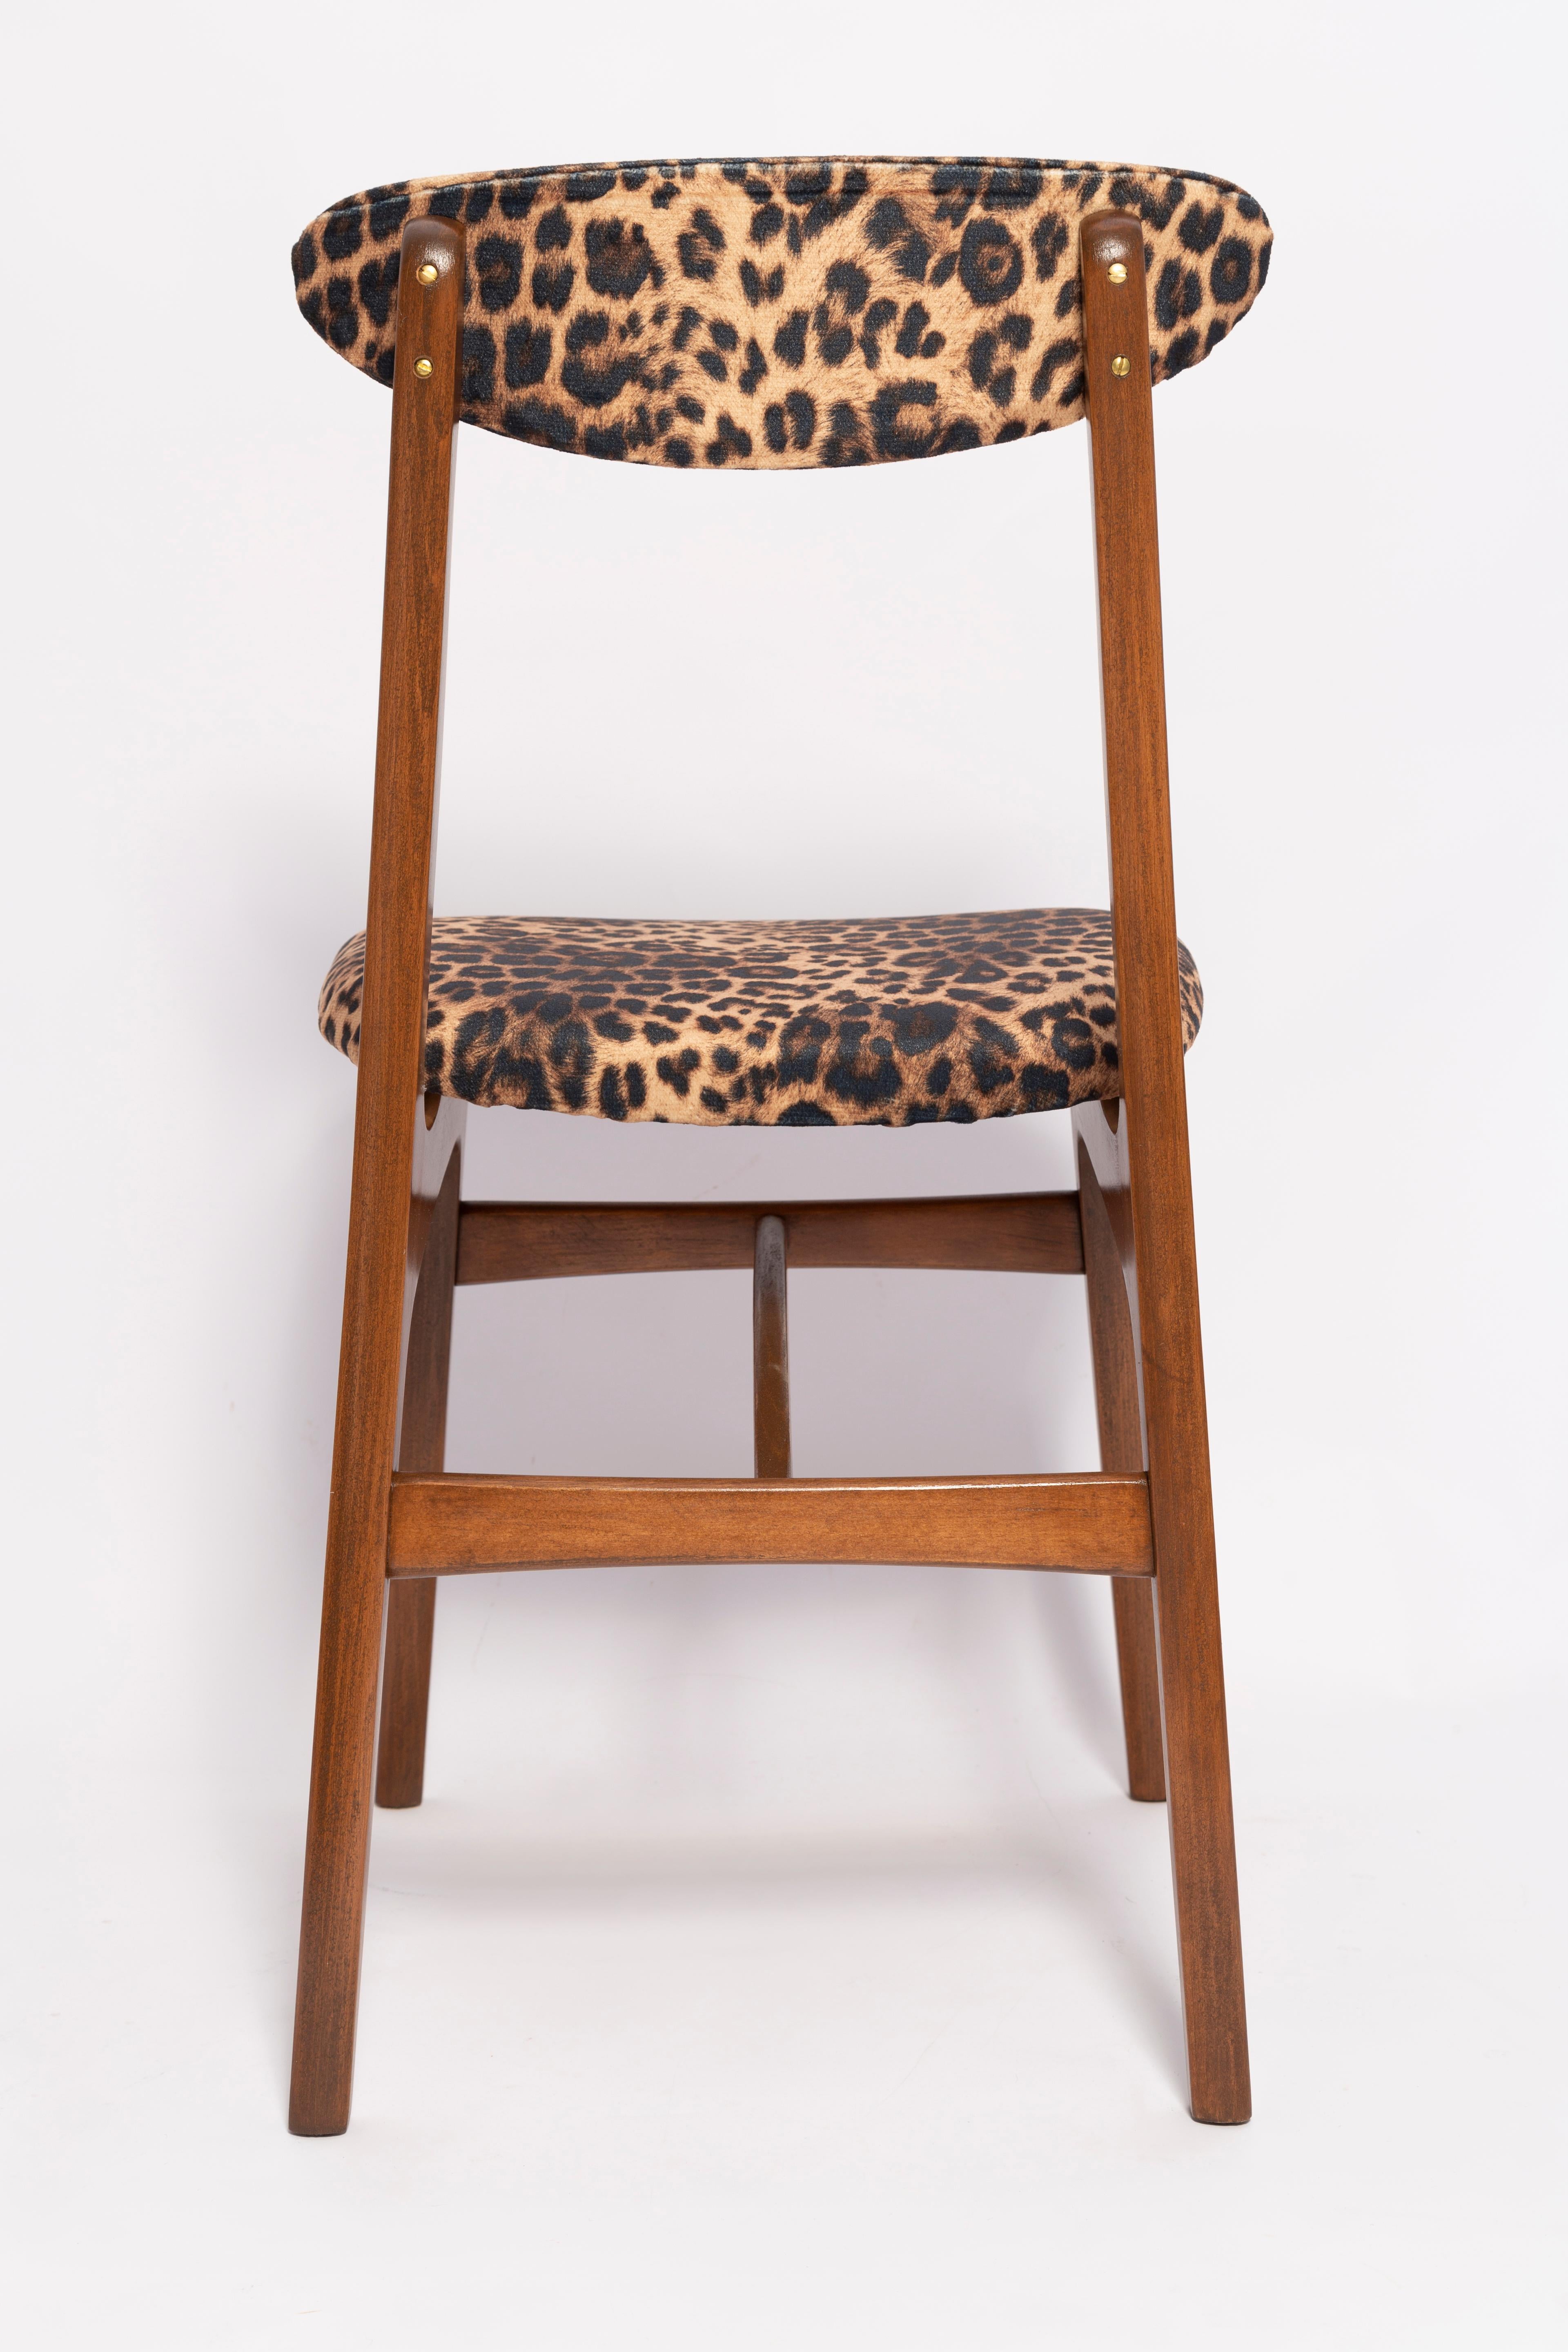 Six Mid-Century Leopard Velvet Chairs, Walnut Wood, Rajmund Halas, Poland, 1960s For Sale 2